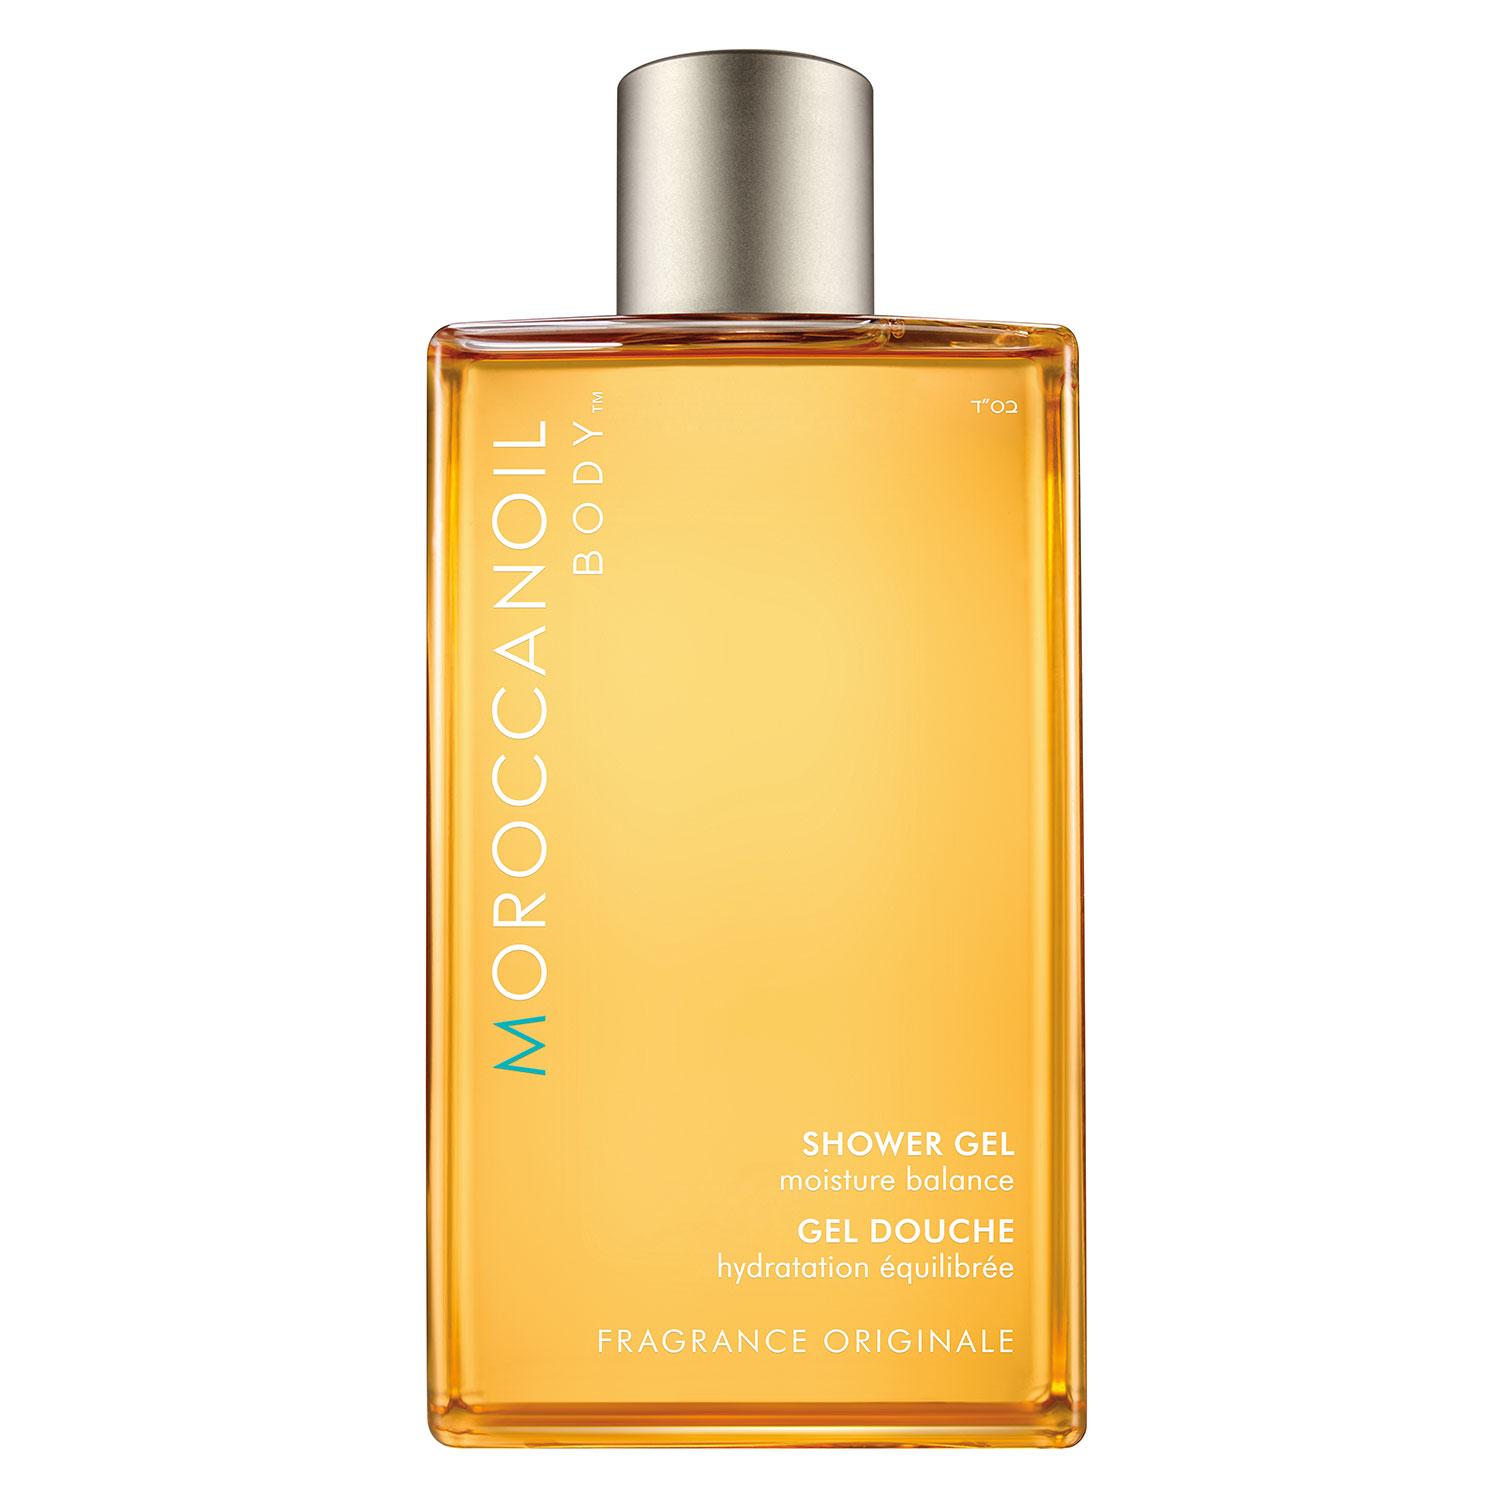 Moroccanoil Body - Shower Gel Fragrance Originale